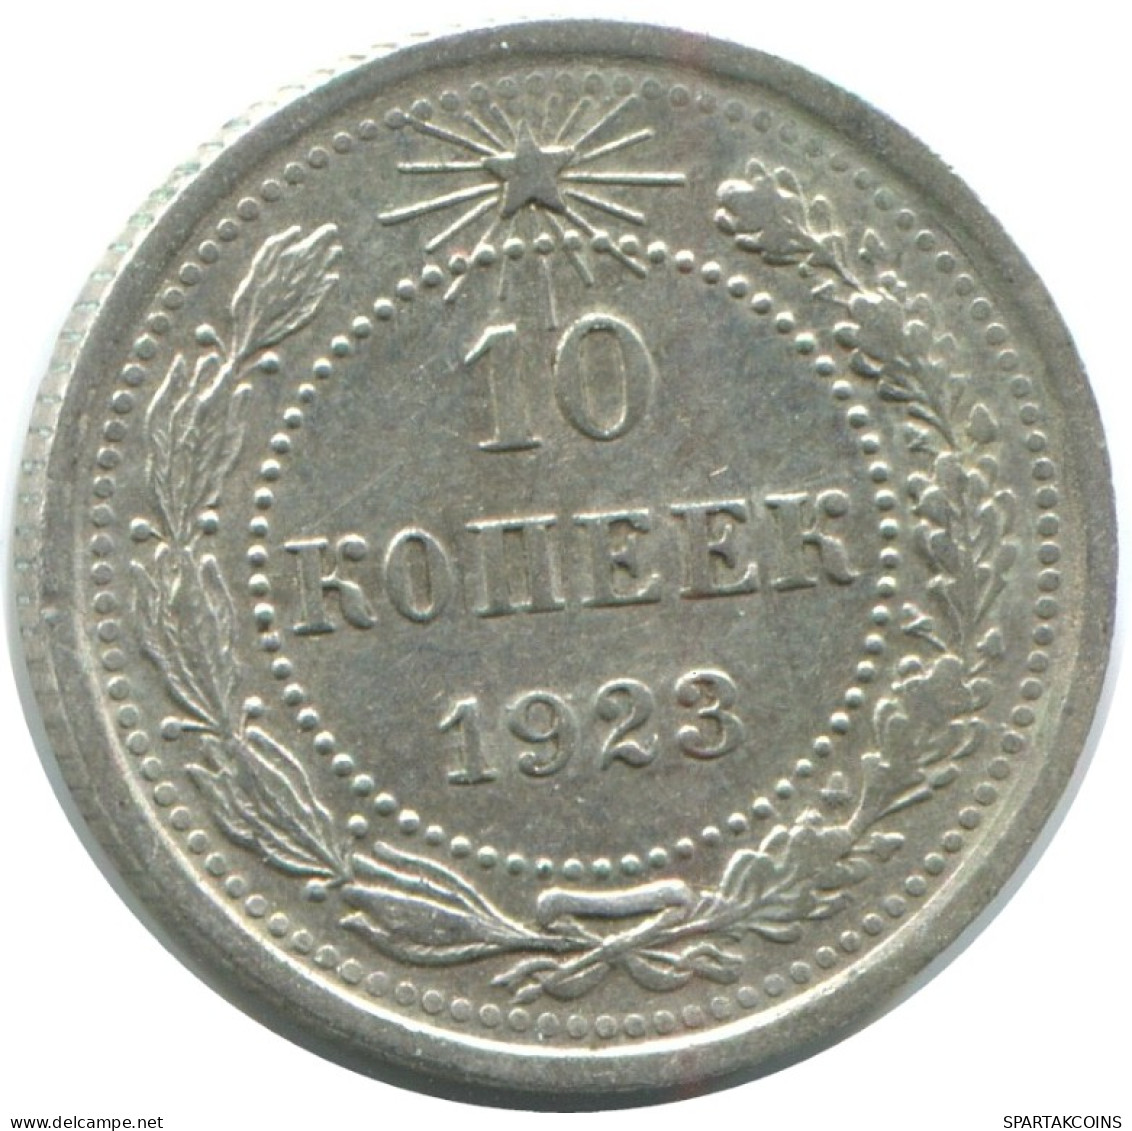 10 KOPEKS 1923 RUSSLAND RUSSIA RSFSR SILBER Münze HIGH GRADE #AE998.4.D.A - Rusia